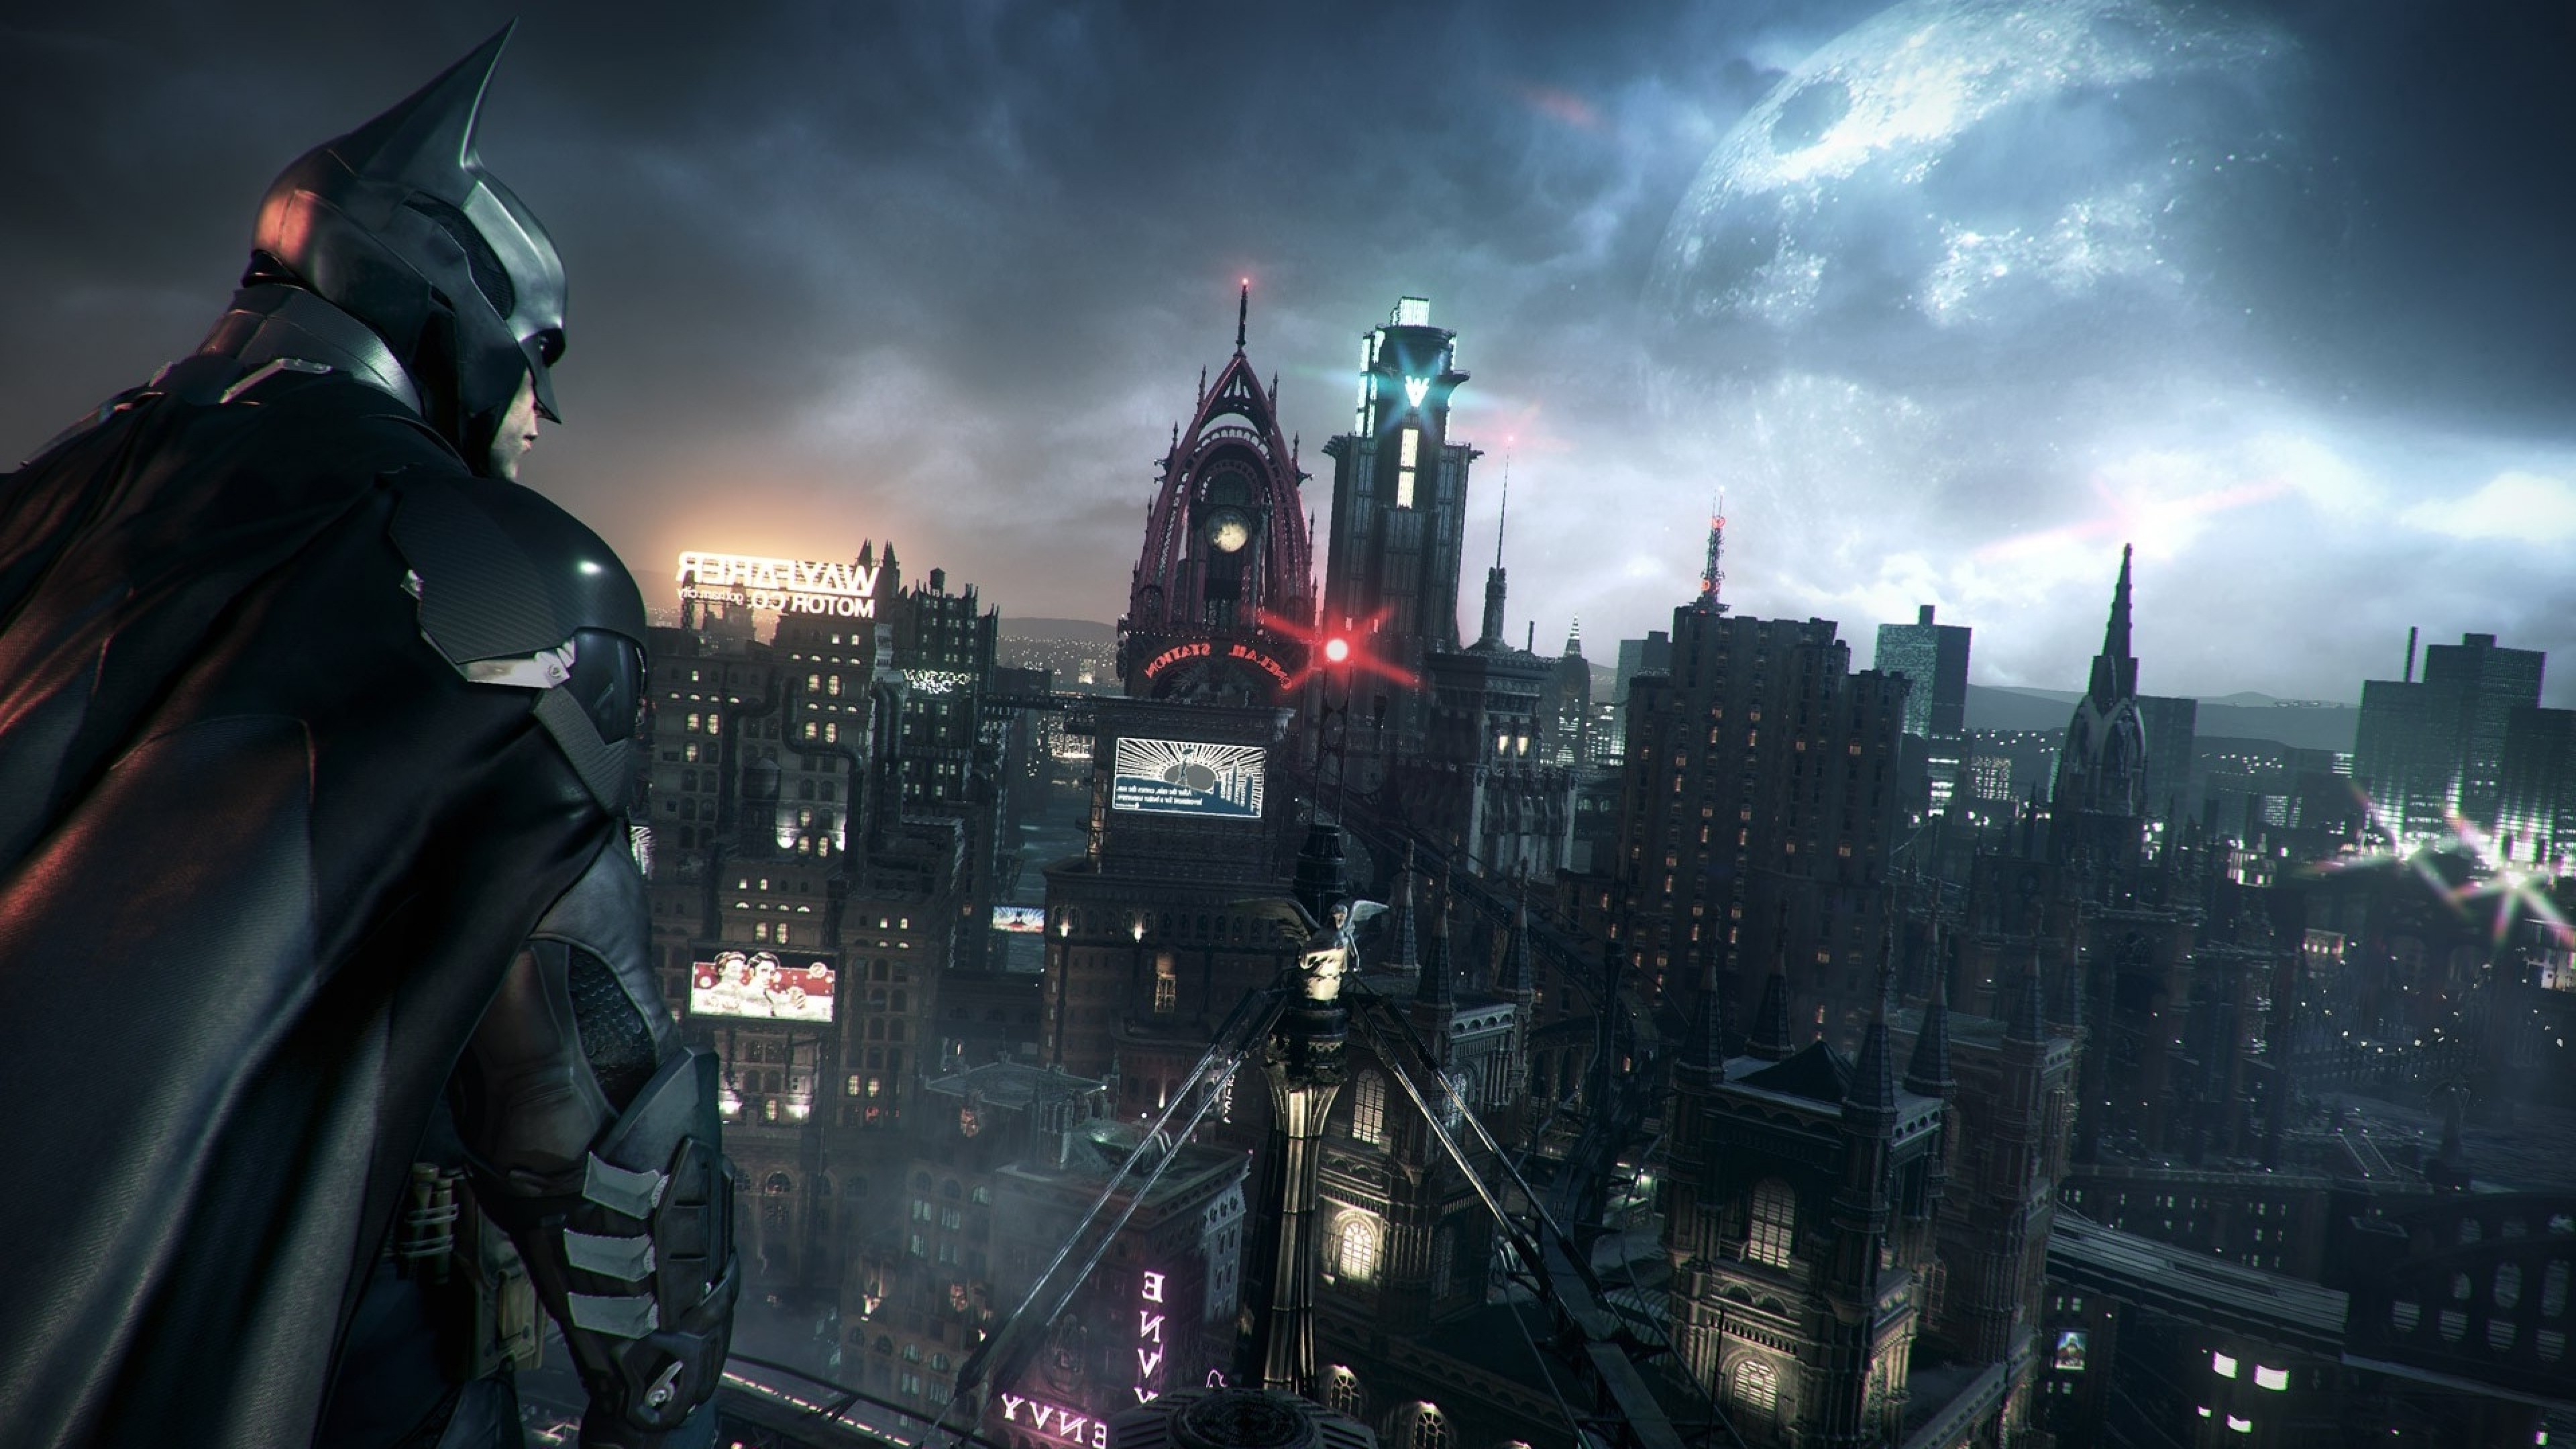 Batman: Arkham Knight, Rocksteady Studios, Batman, Gotham City, Video Games  Wallpapers HD / Desktop and Mobile Backgrounds